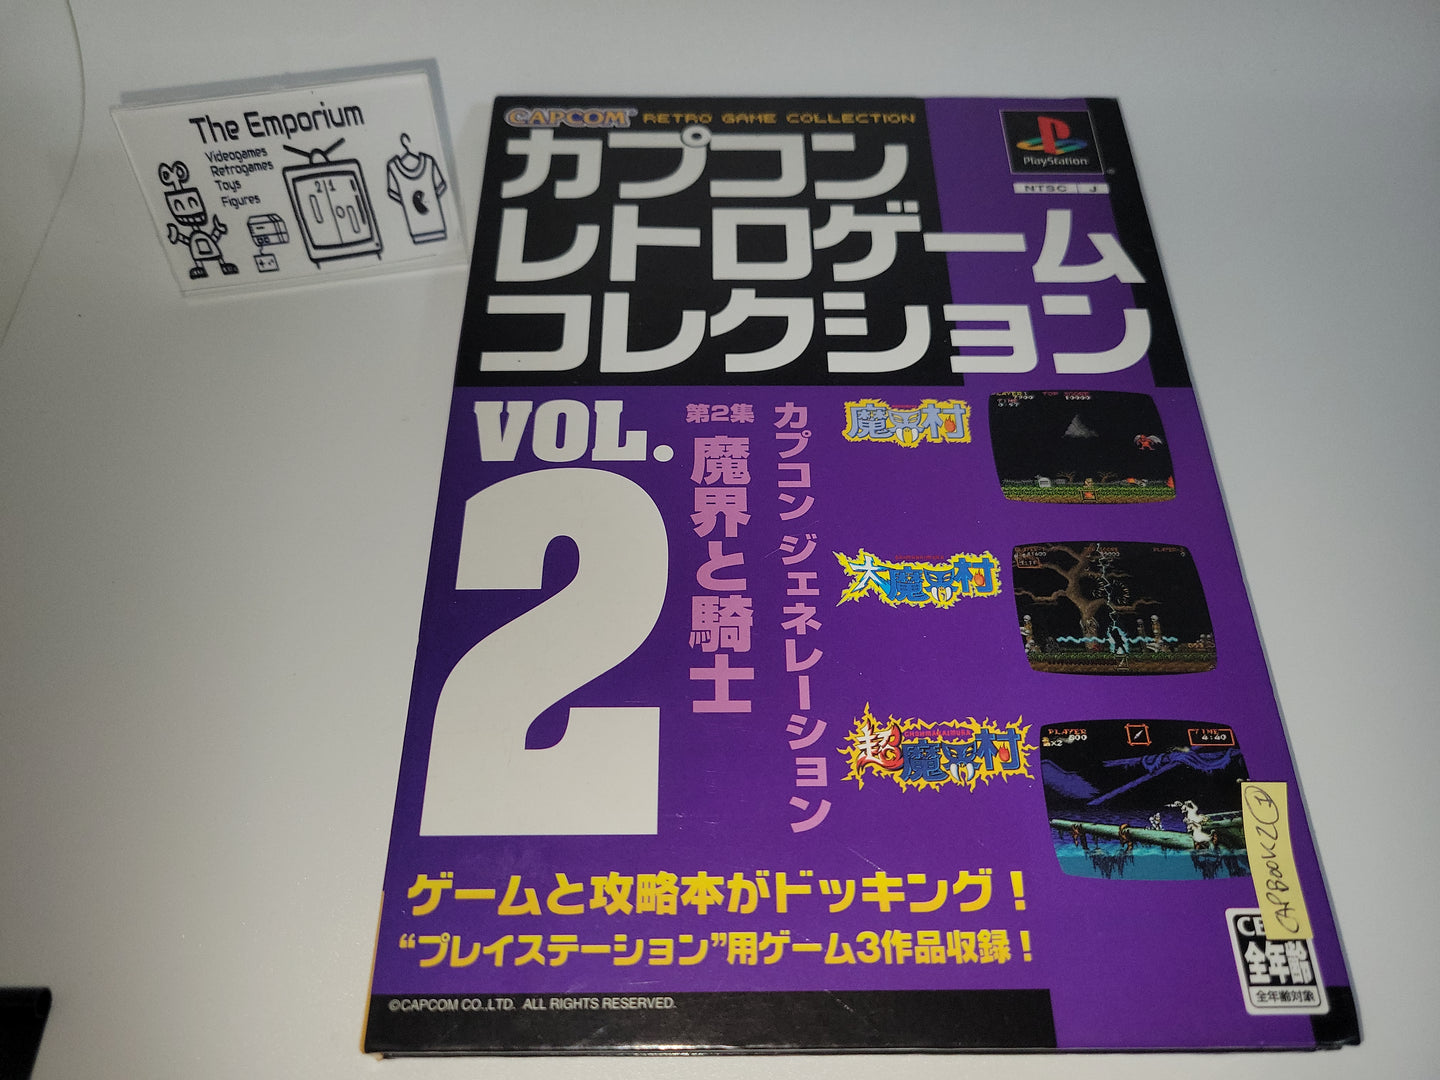 Capcom Retro Game Collection Vol.2 - Sony PS1 Playstation